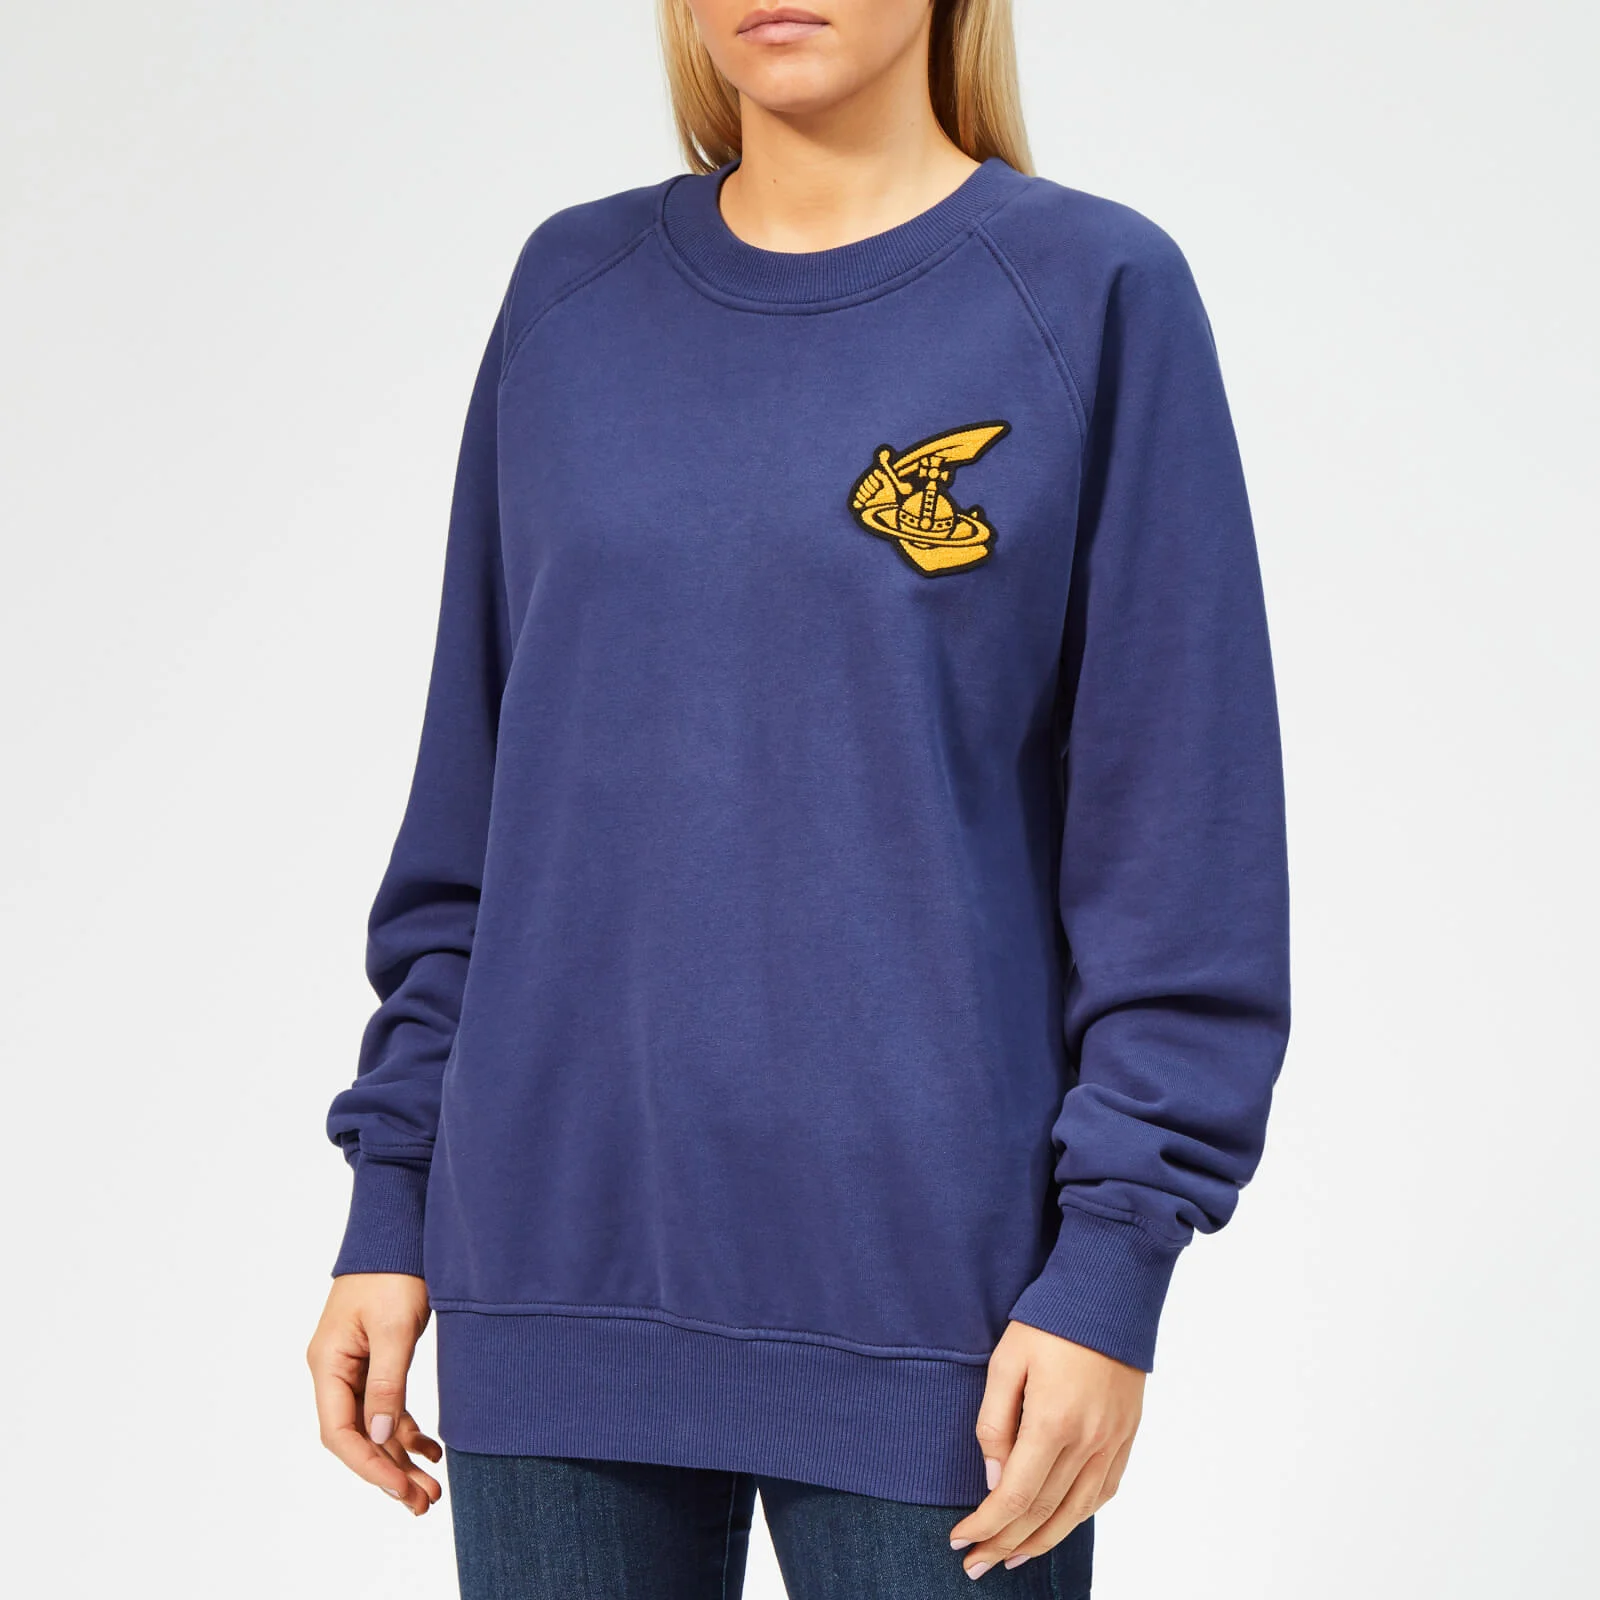 Vivienne Westwood Anglomania Women's Classic Sweatshirt with Badge - Navy Image 1